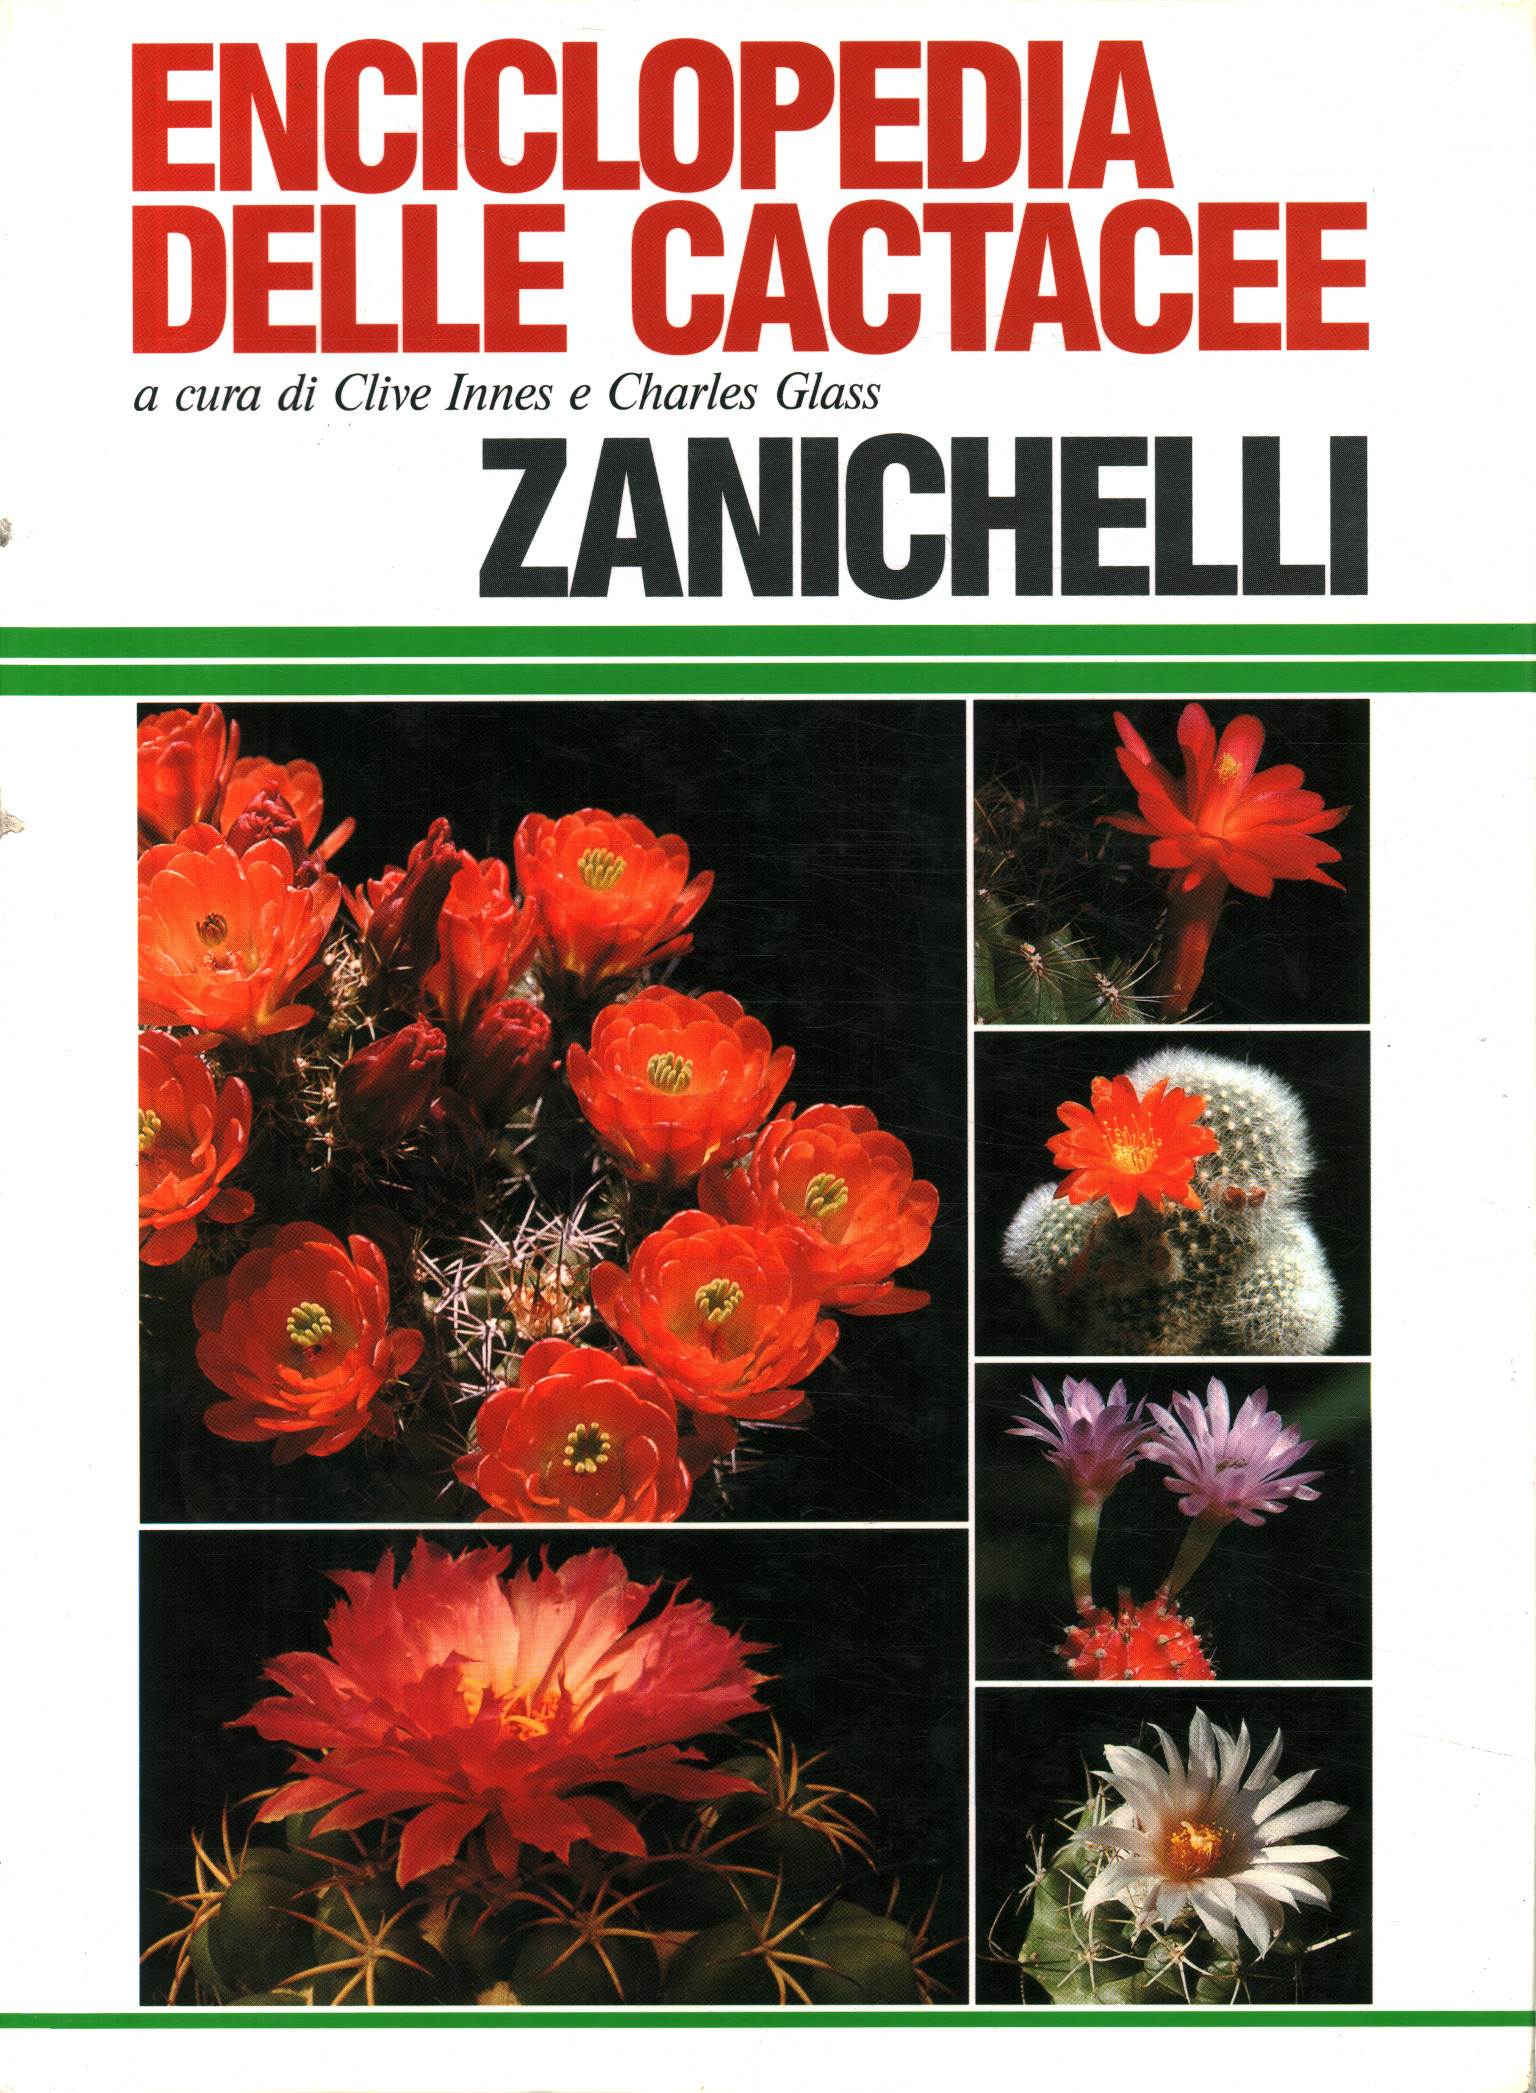 Cactaceae Encyclopedia